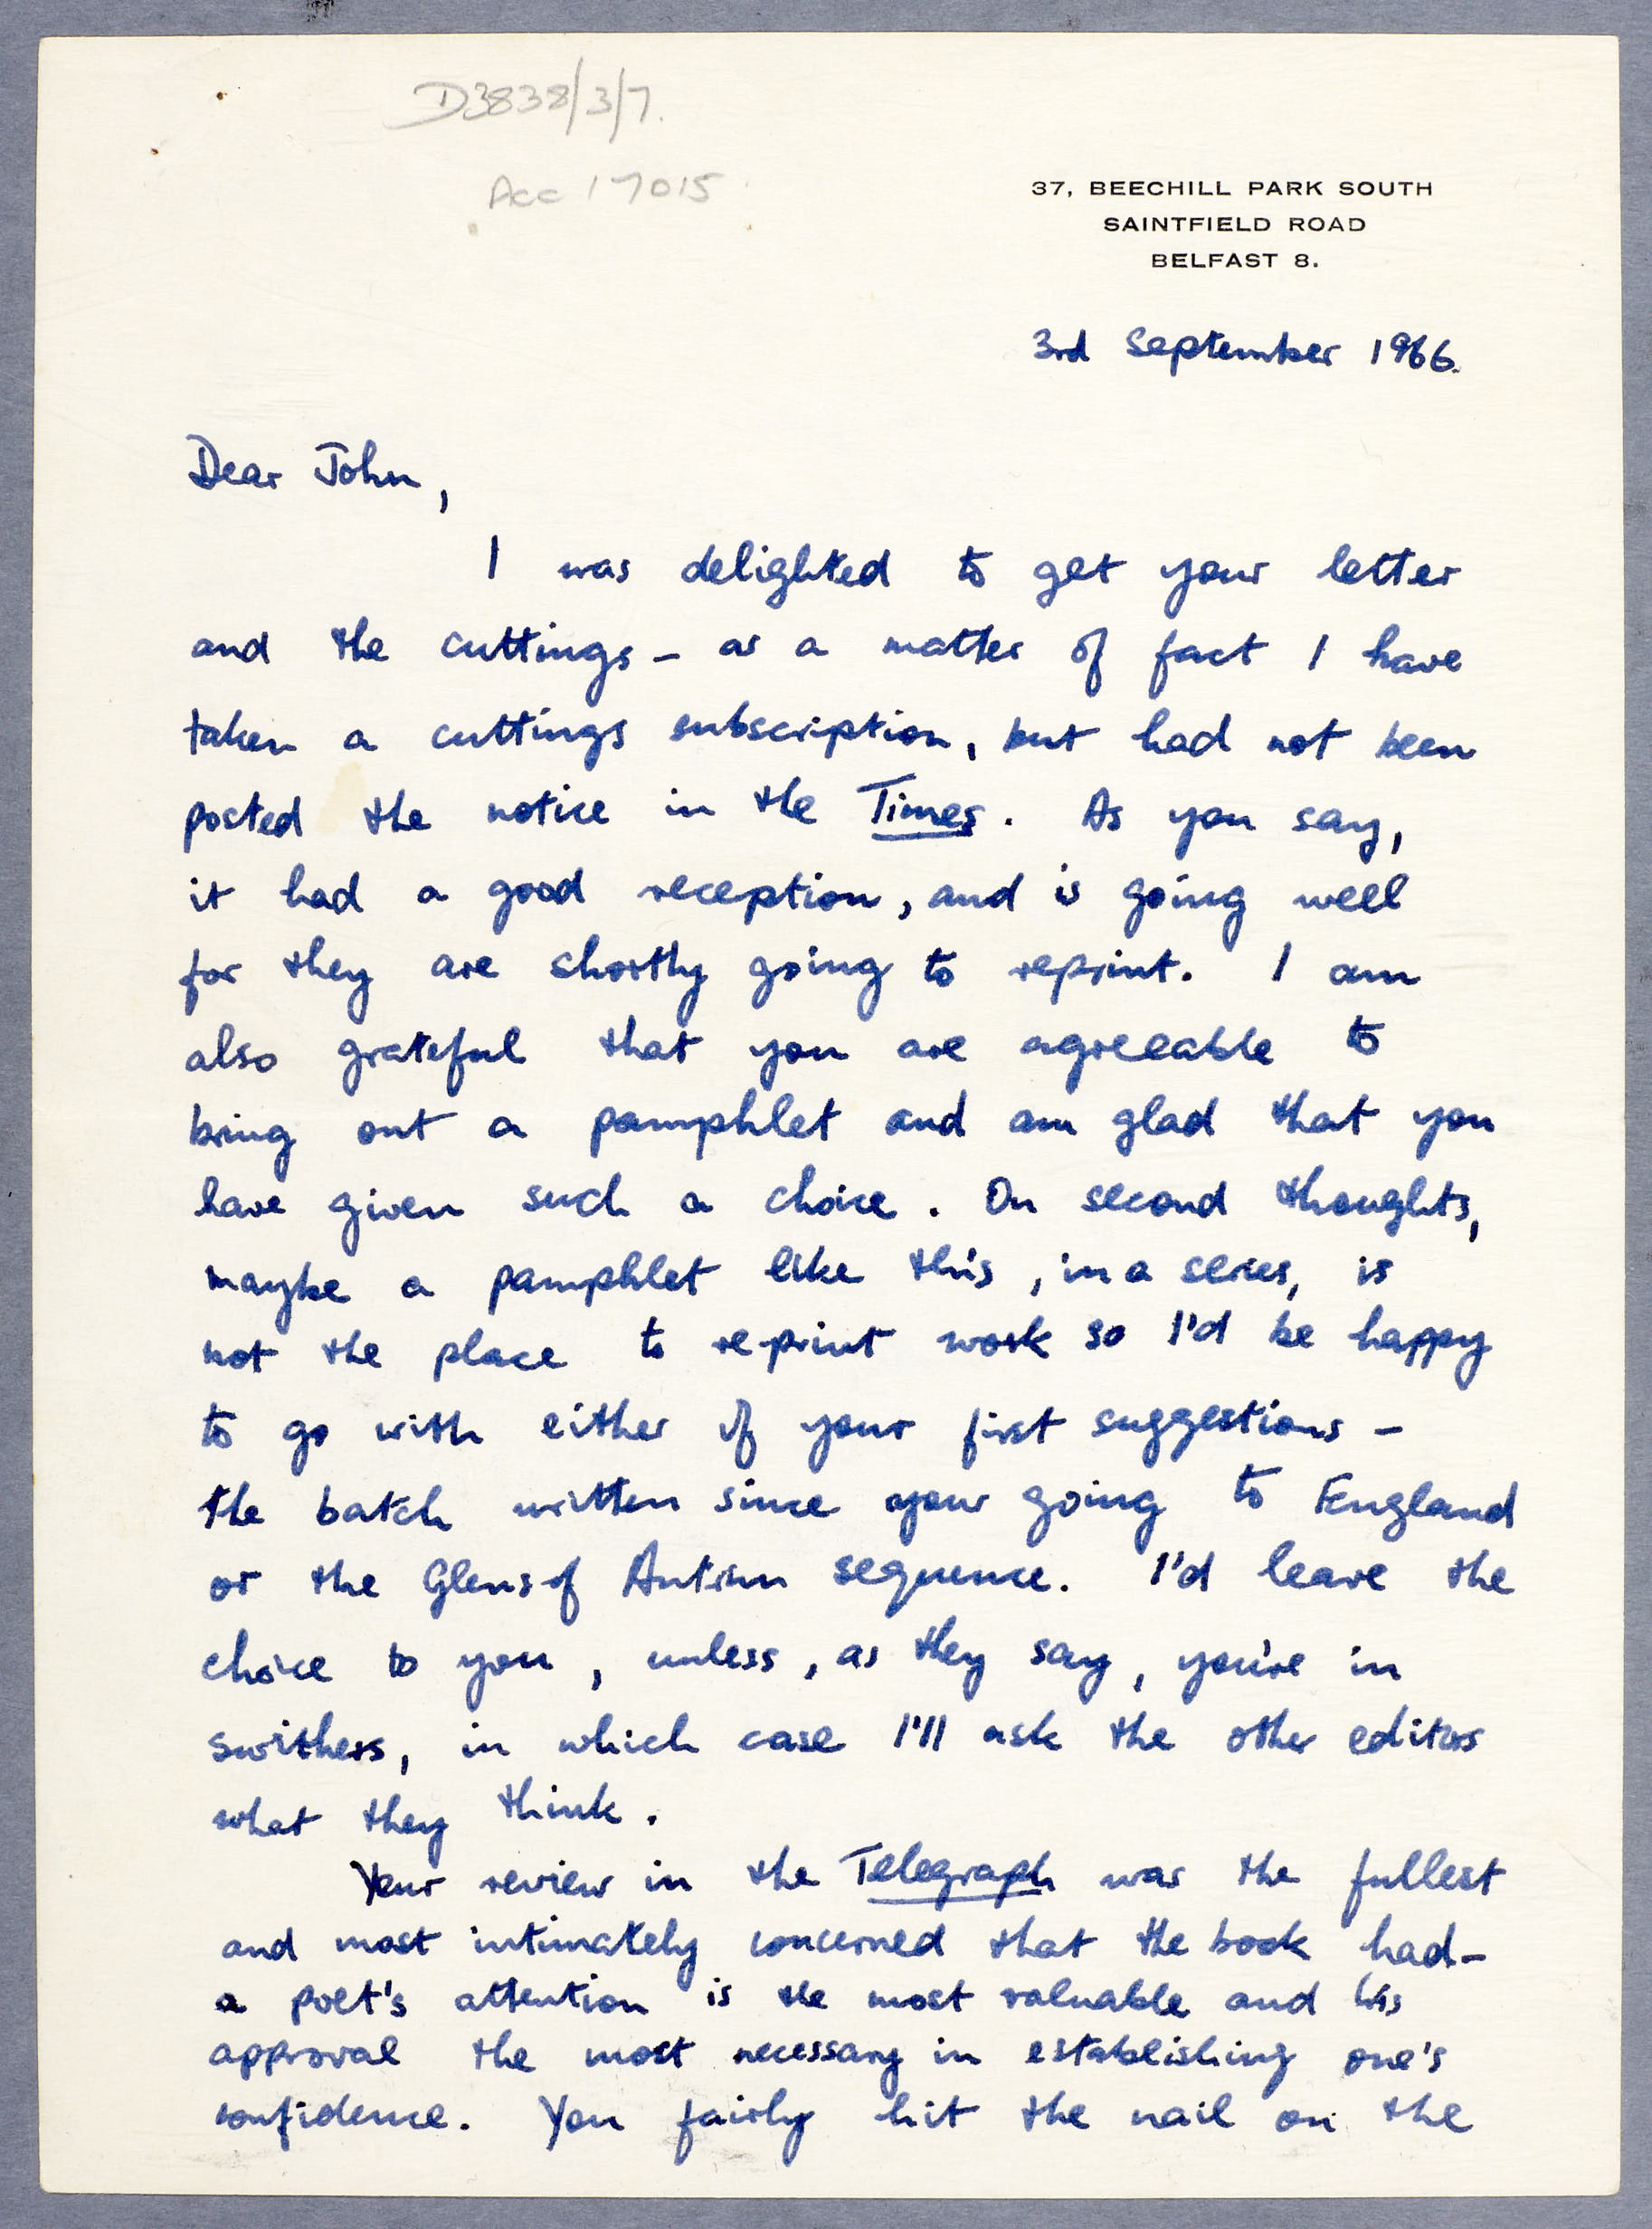 Seamus Heaney鈥檚 letter to John Hewitt in September 1966